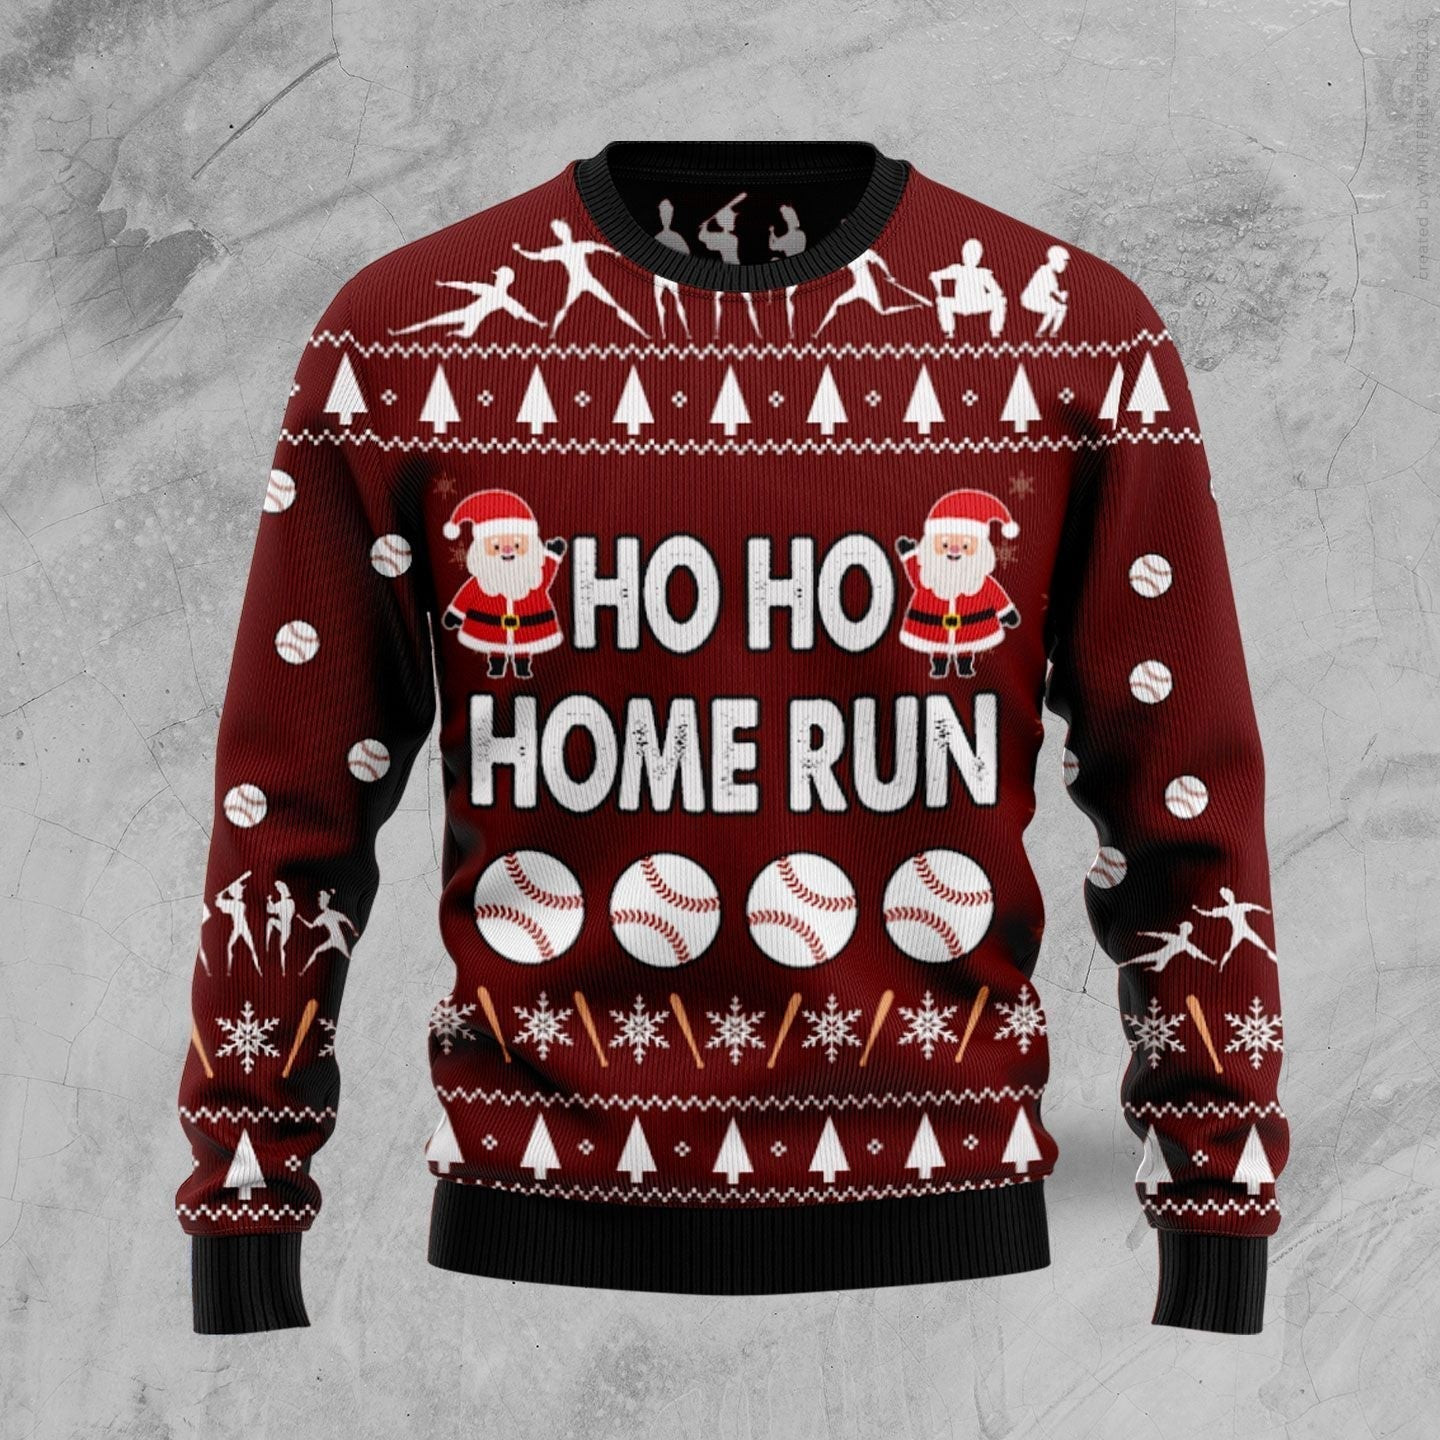 Baseball Hoho Home Run Ugly Christmas Sweater Ugly Sweater For Men Women